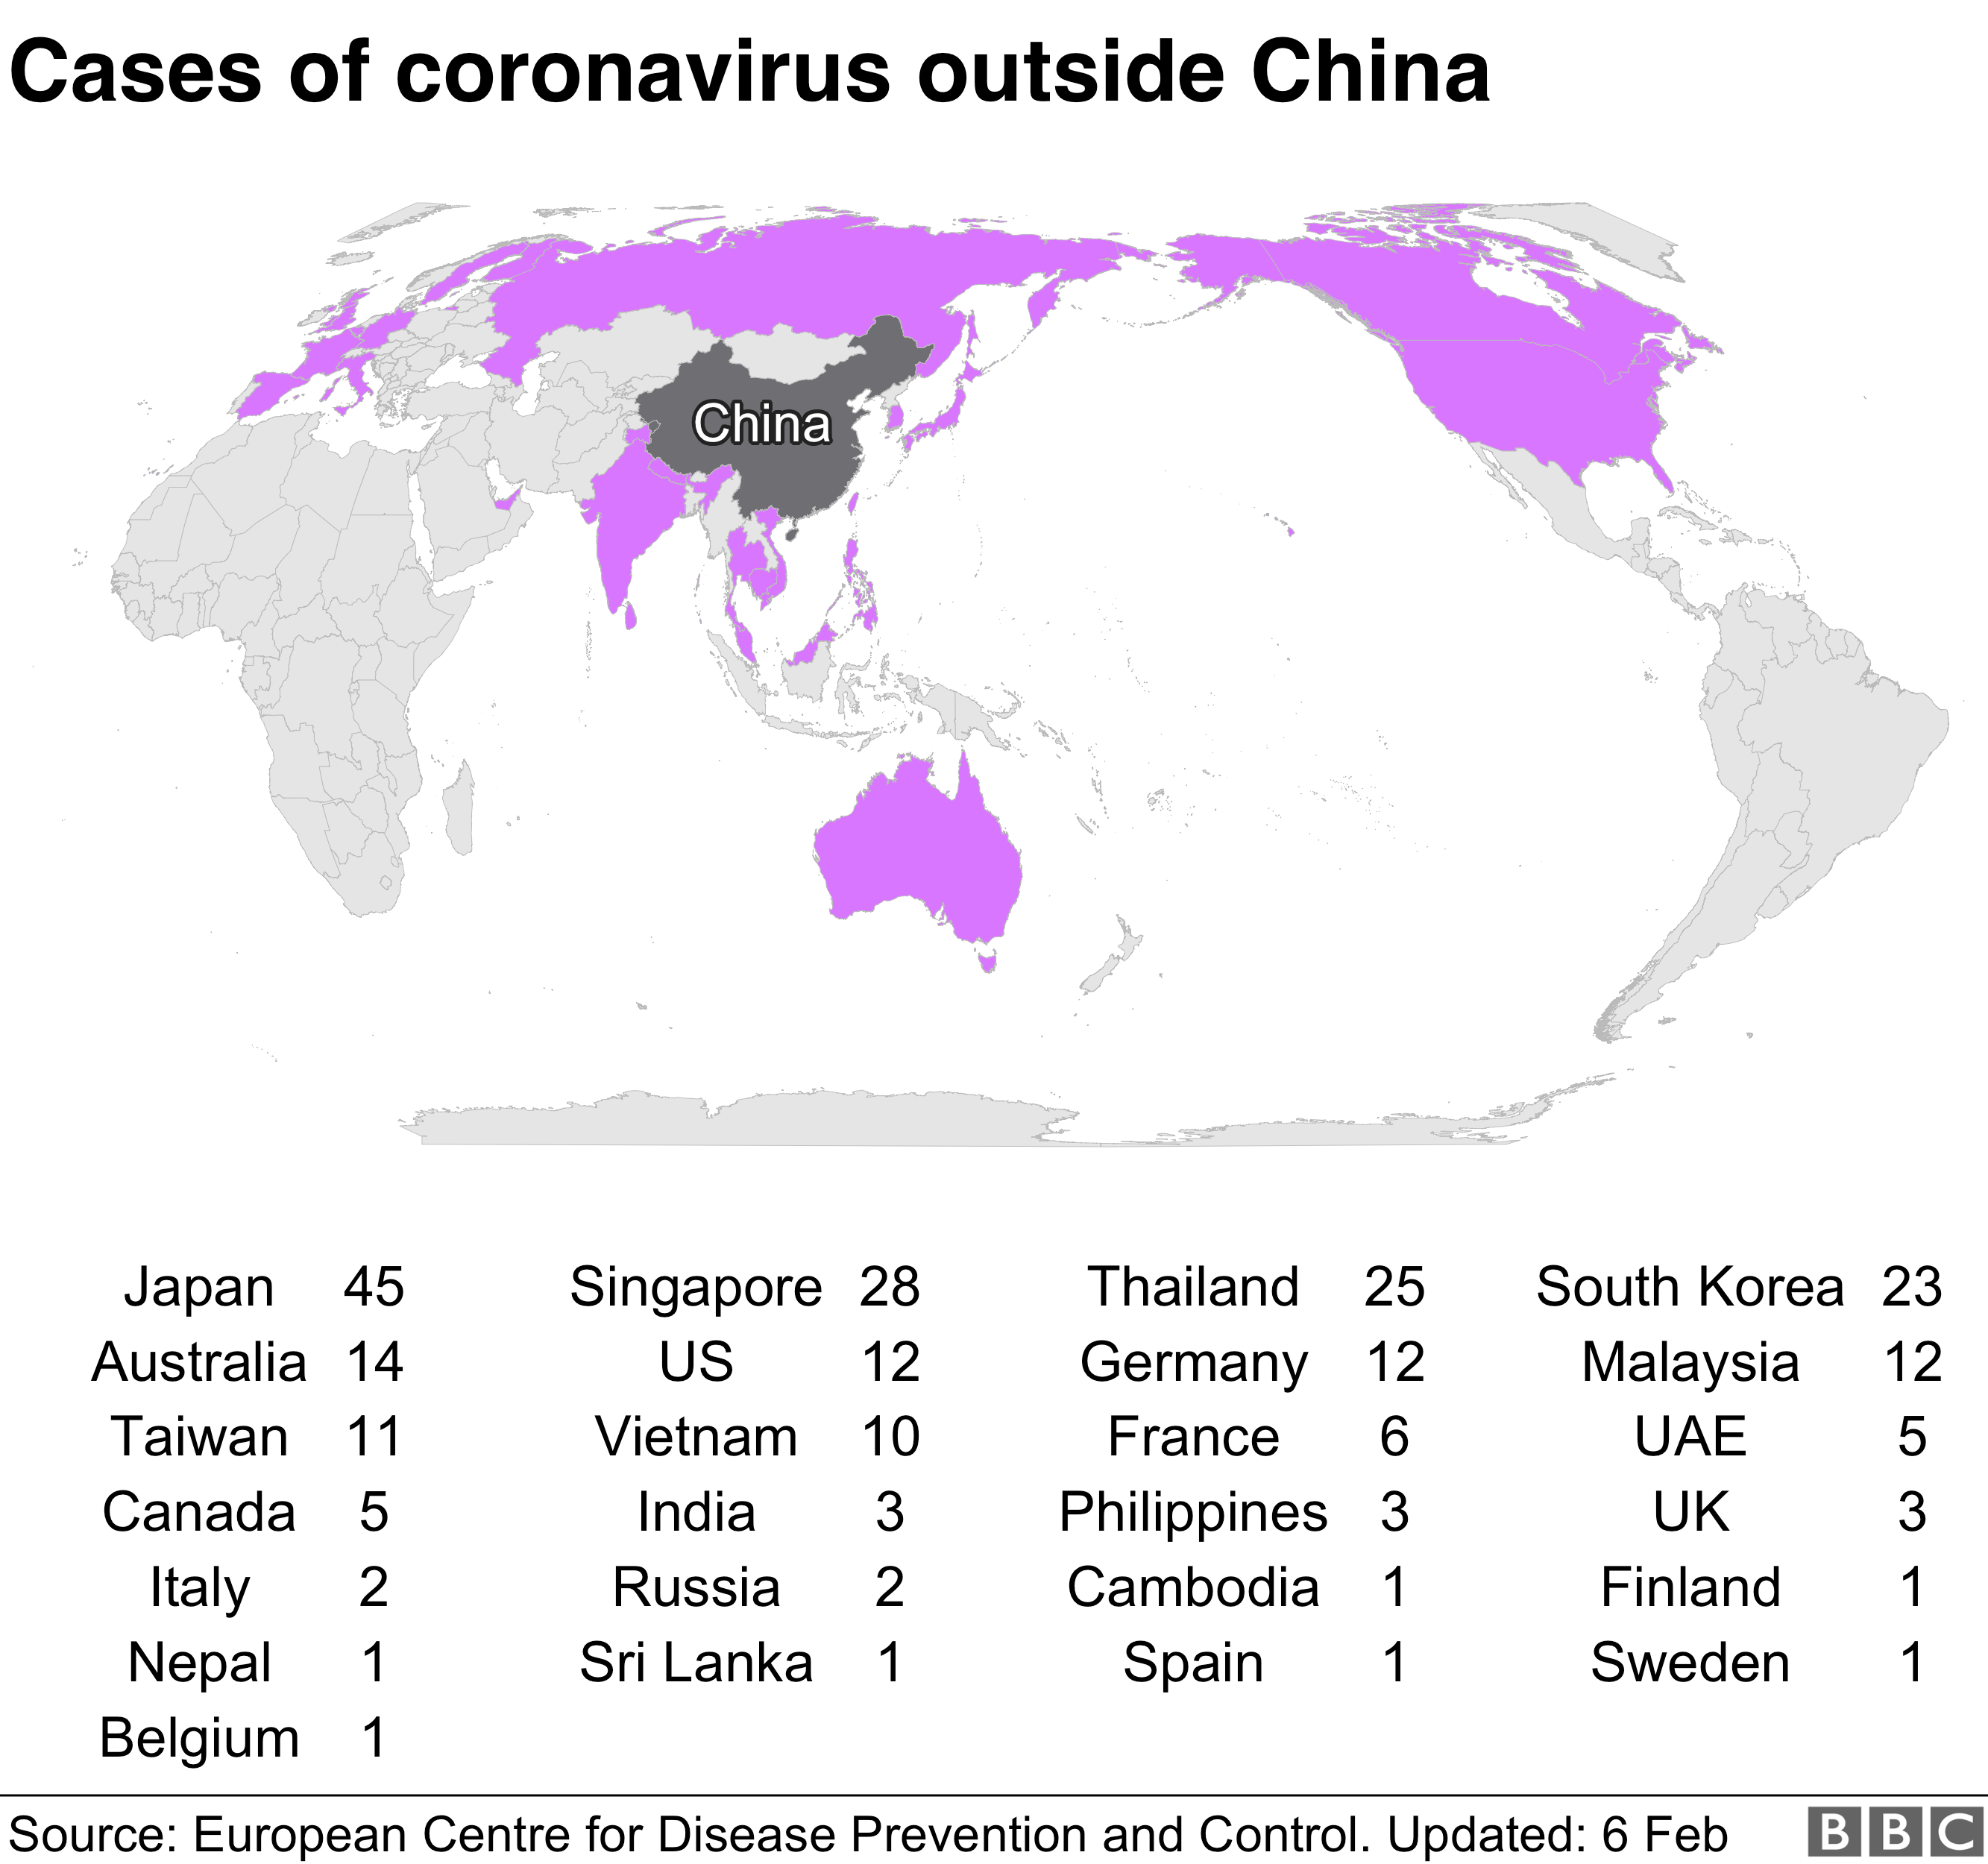 Cases of coronavirus outside China